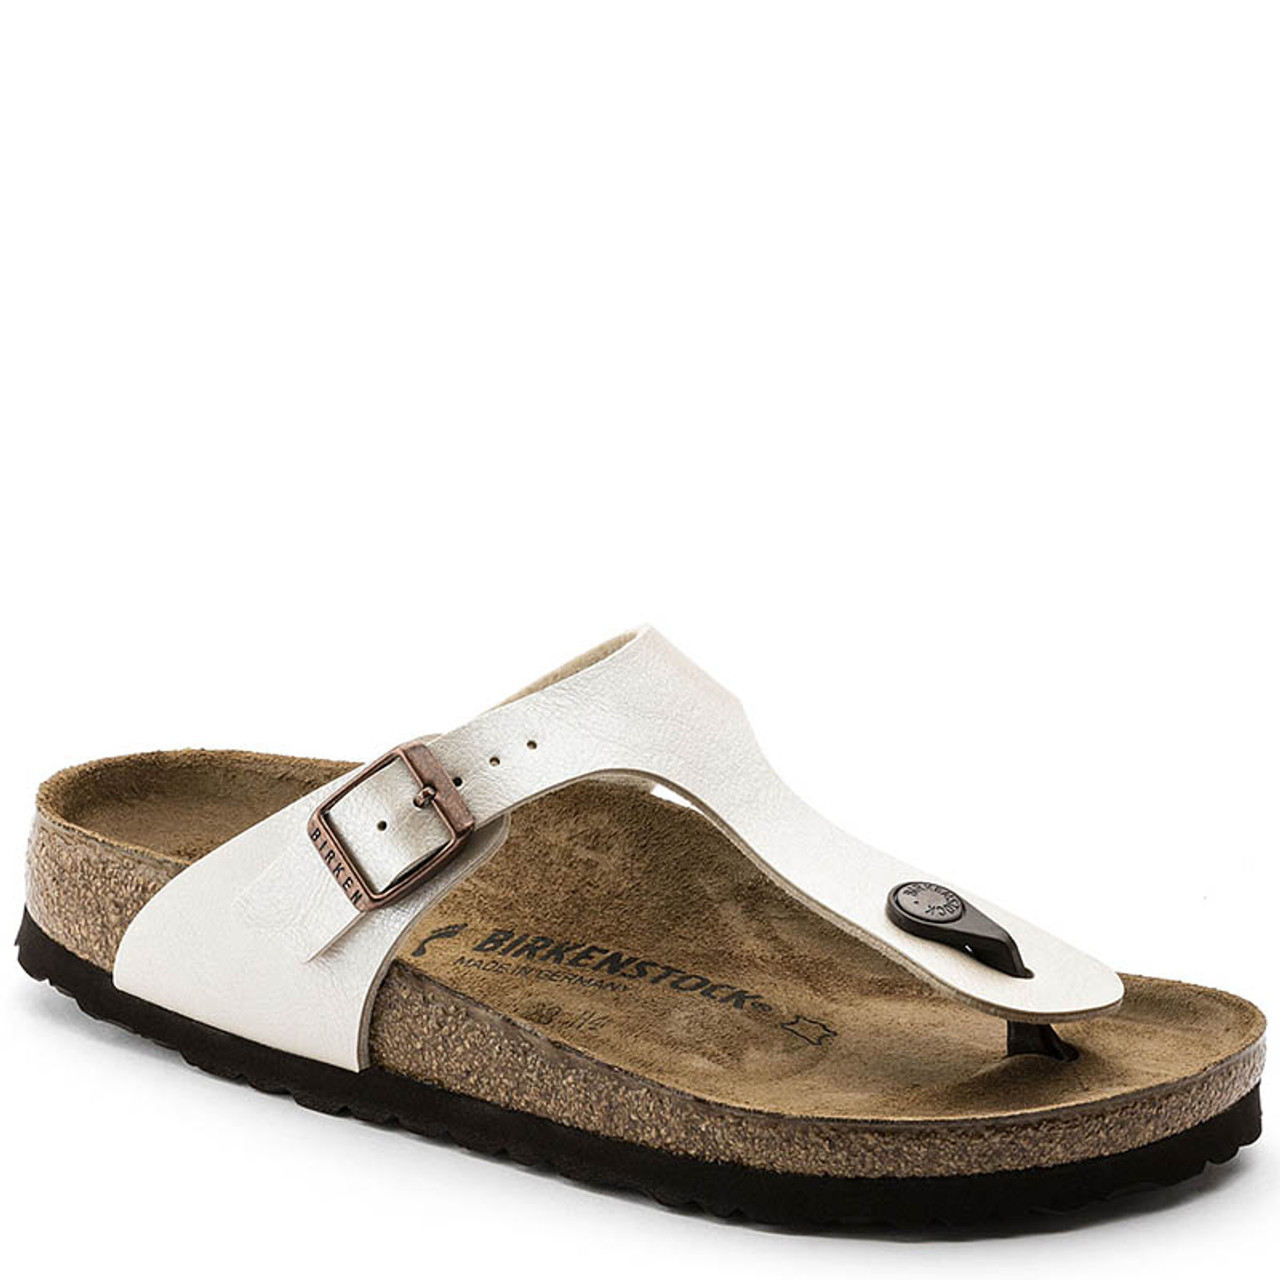 GIZEH BIRKO-FLOR Pearl White Sandals 